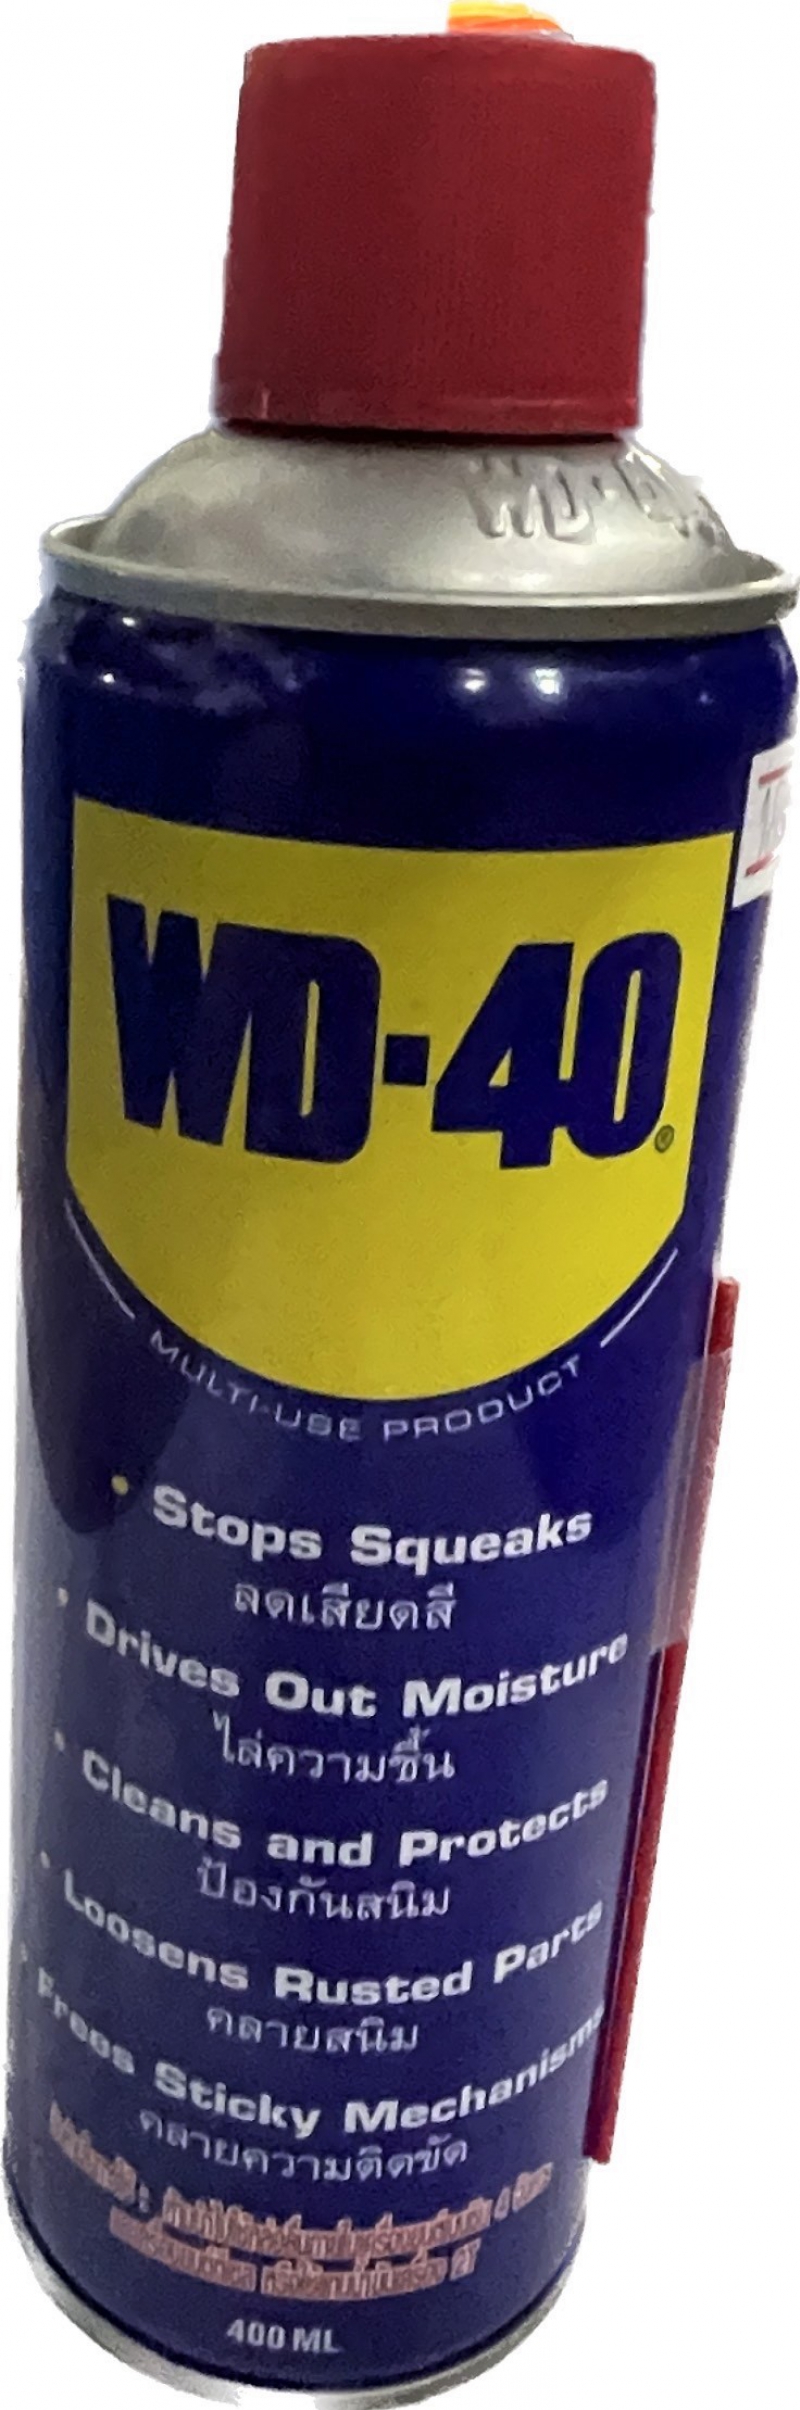 WD-40 น้ำมันอเนกประสงค์ 400 ML